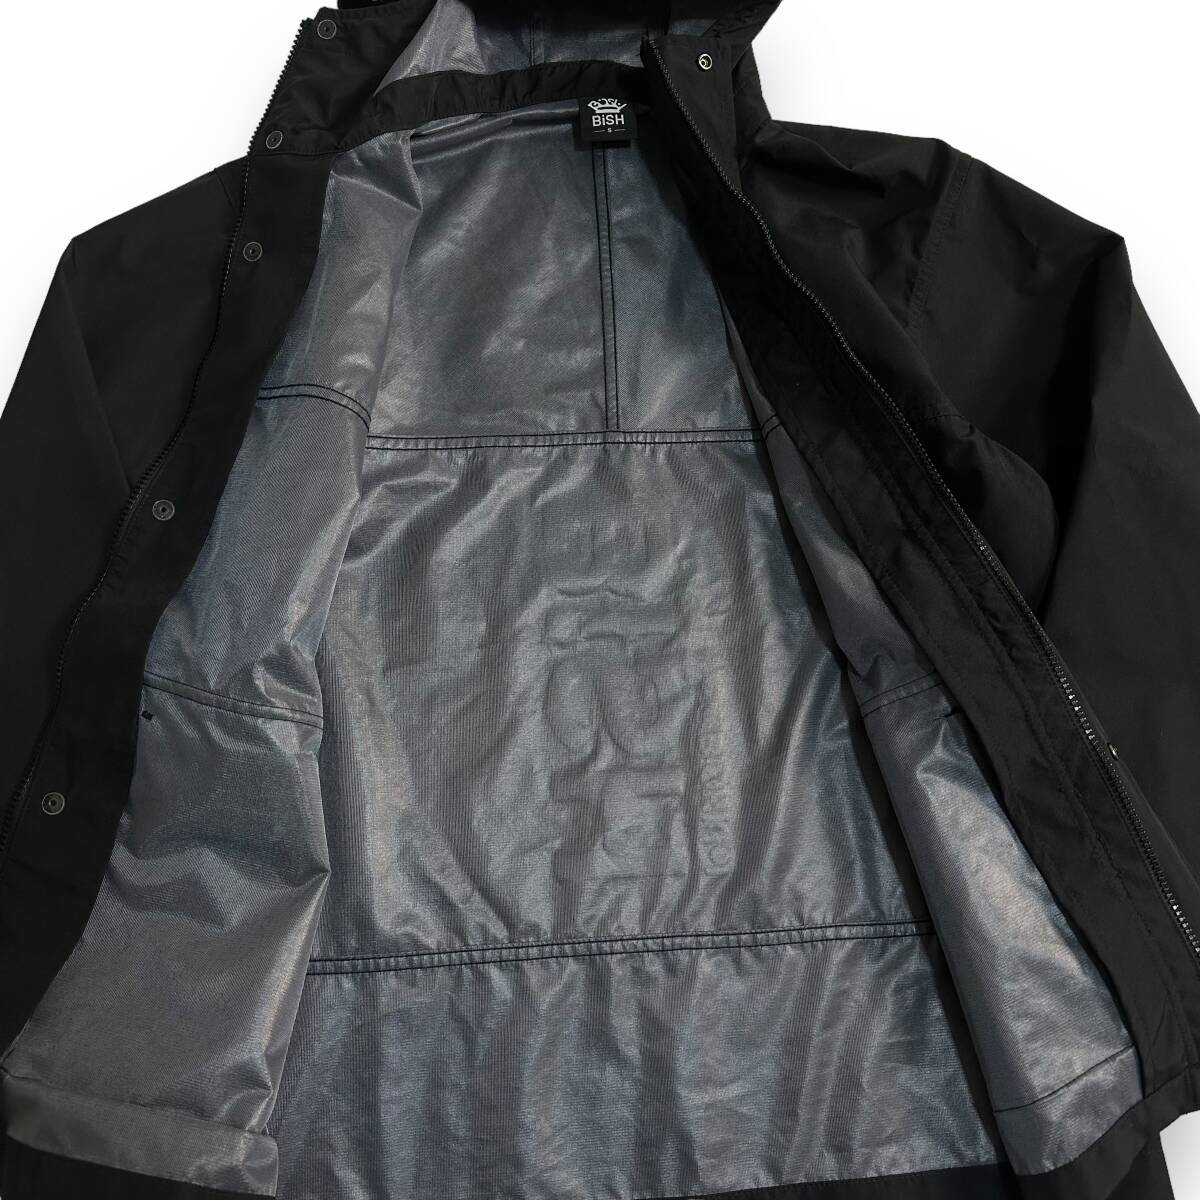  excellent [BiSH×GU] collaboration mountain parka jacket black bishu GU S size windbreaker valuable water-repellent 